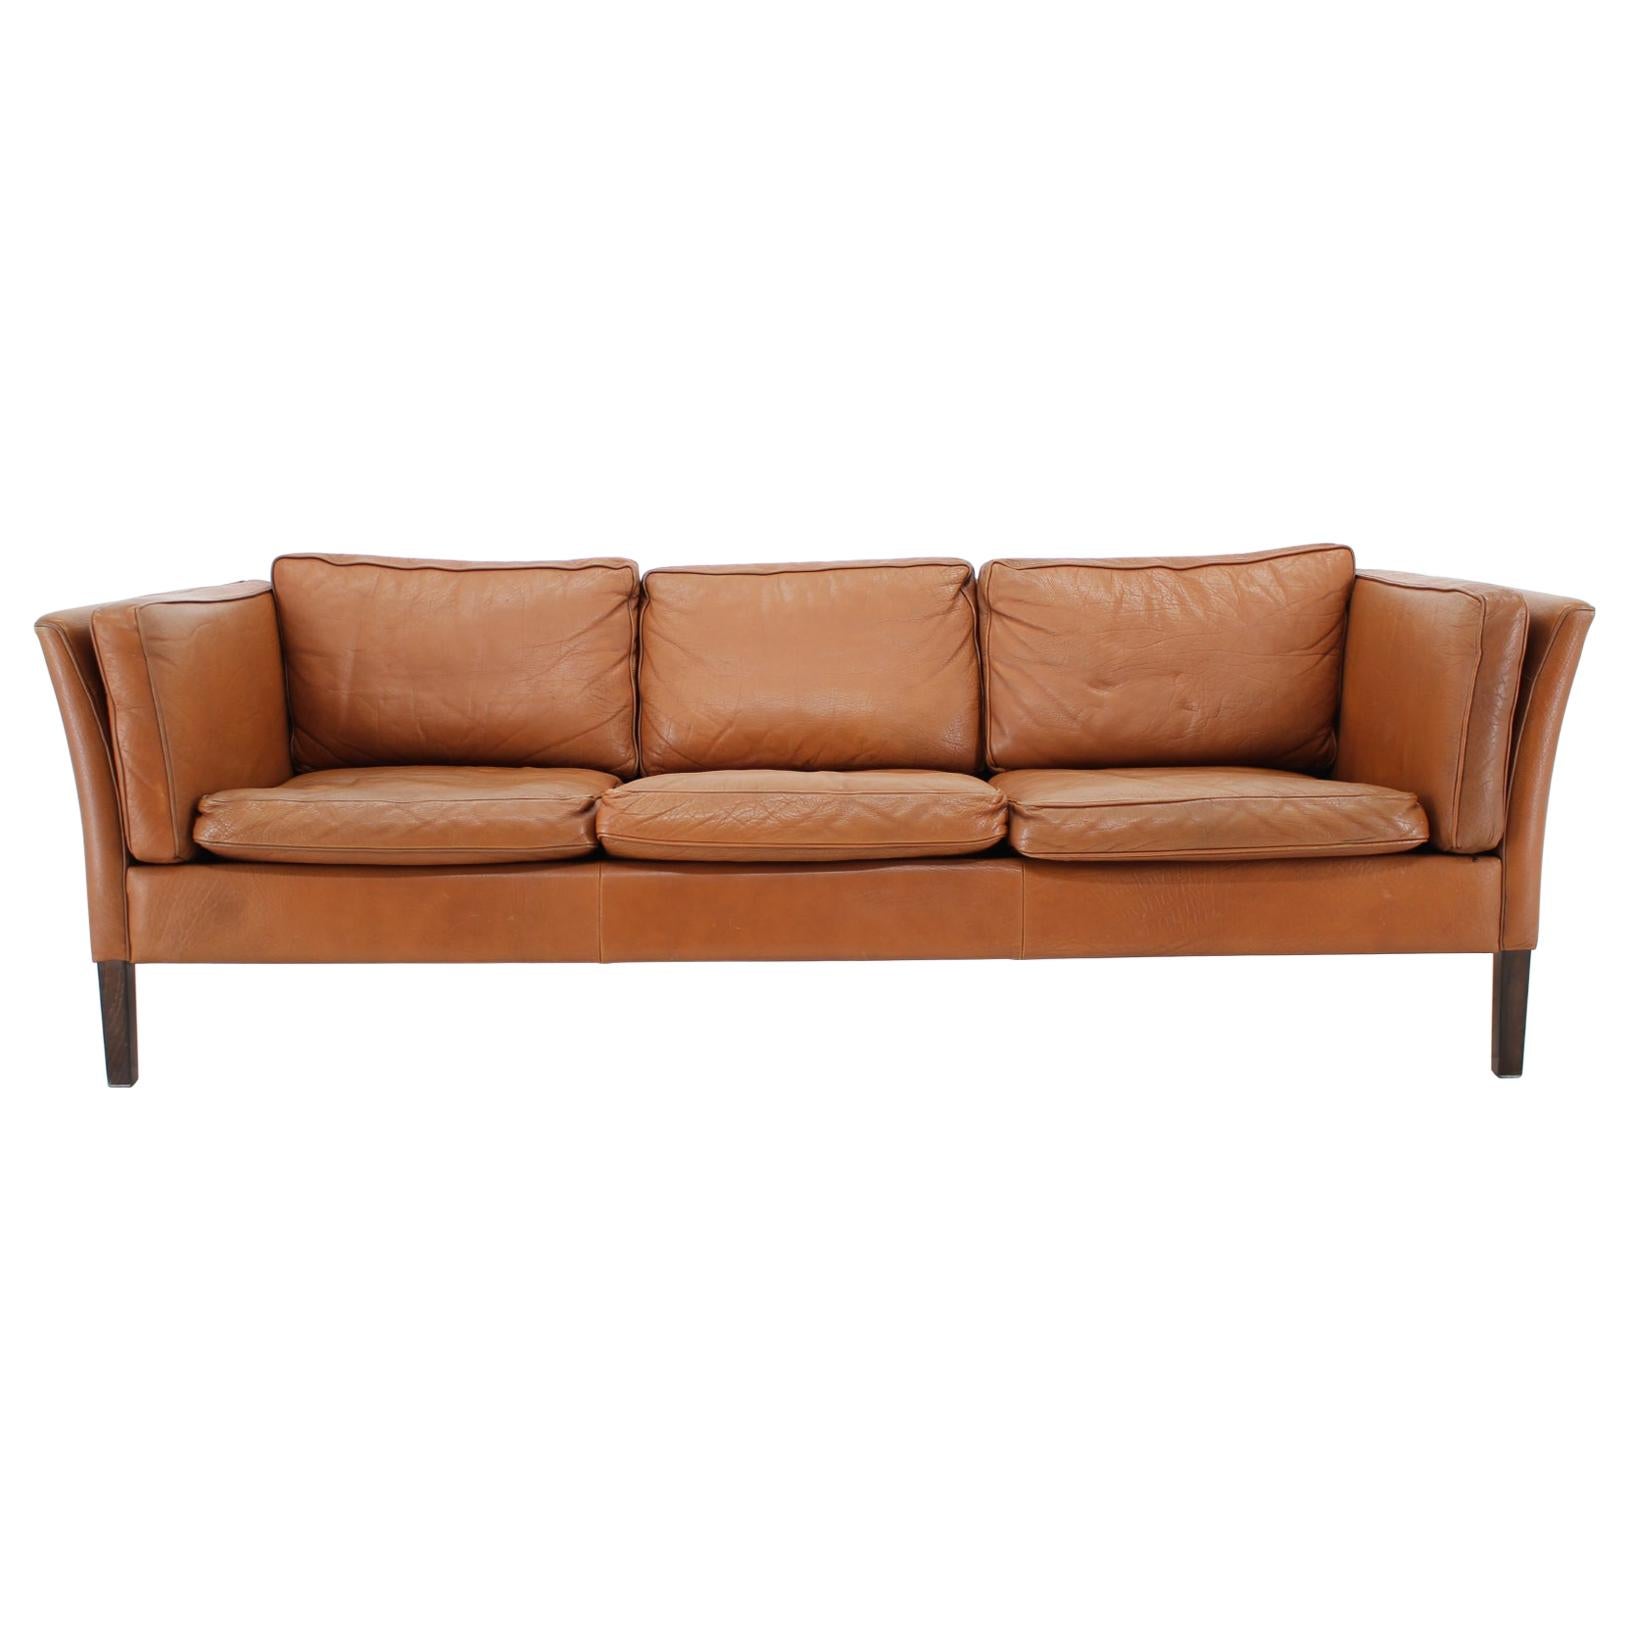 1960s Danish Cognac Brown Leather 3-Seat Sofa